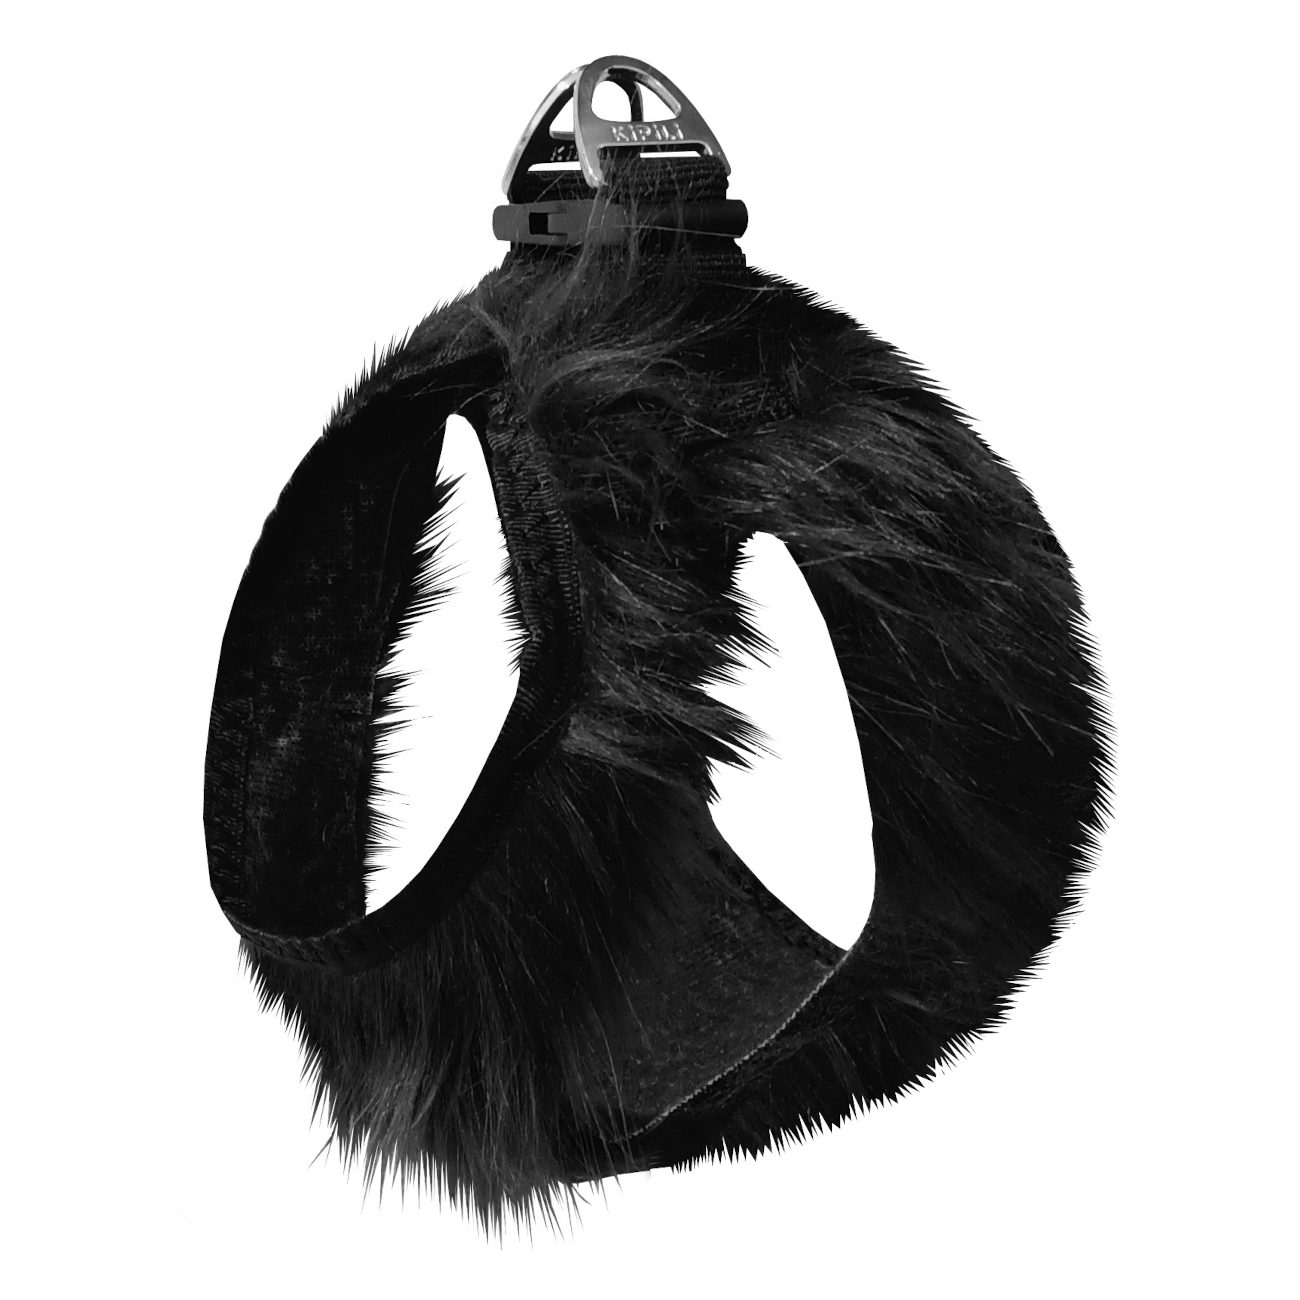 Lisinya205 Üç Kilitli Peluş Kedi Köpek Göğüs Tasması 24-28 cm XX-Small Siyah